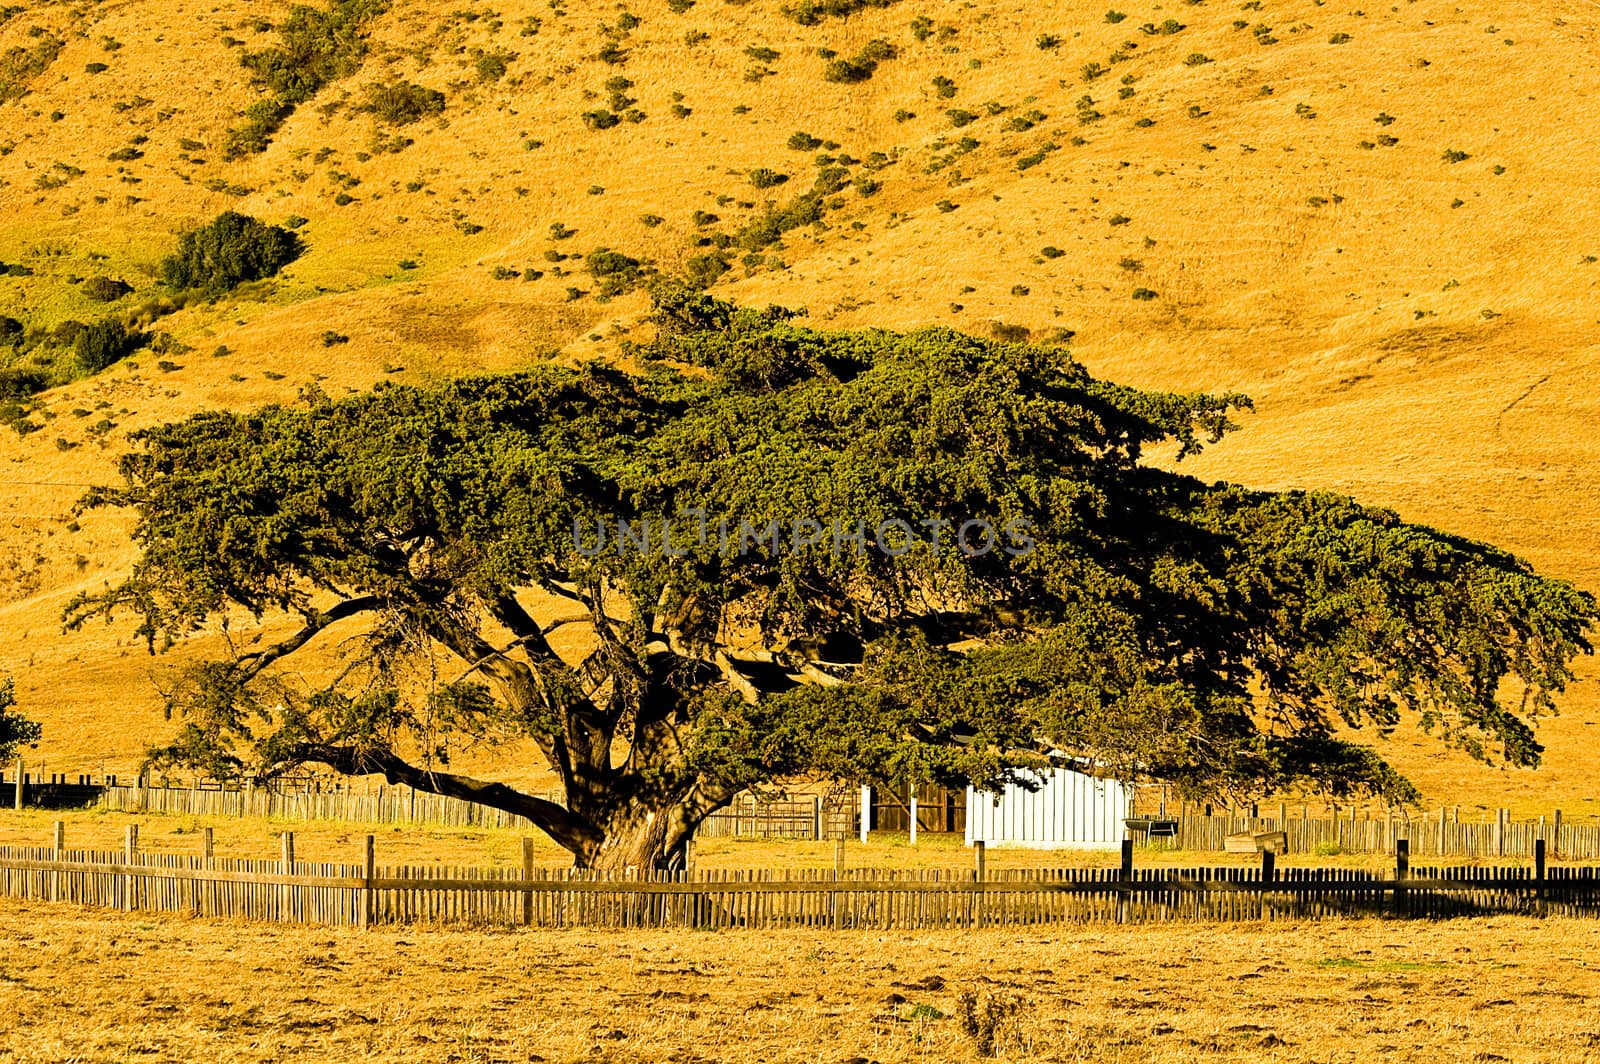 Cypress Tree along Hiway 1 in Big Sur, California